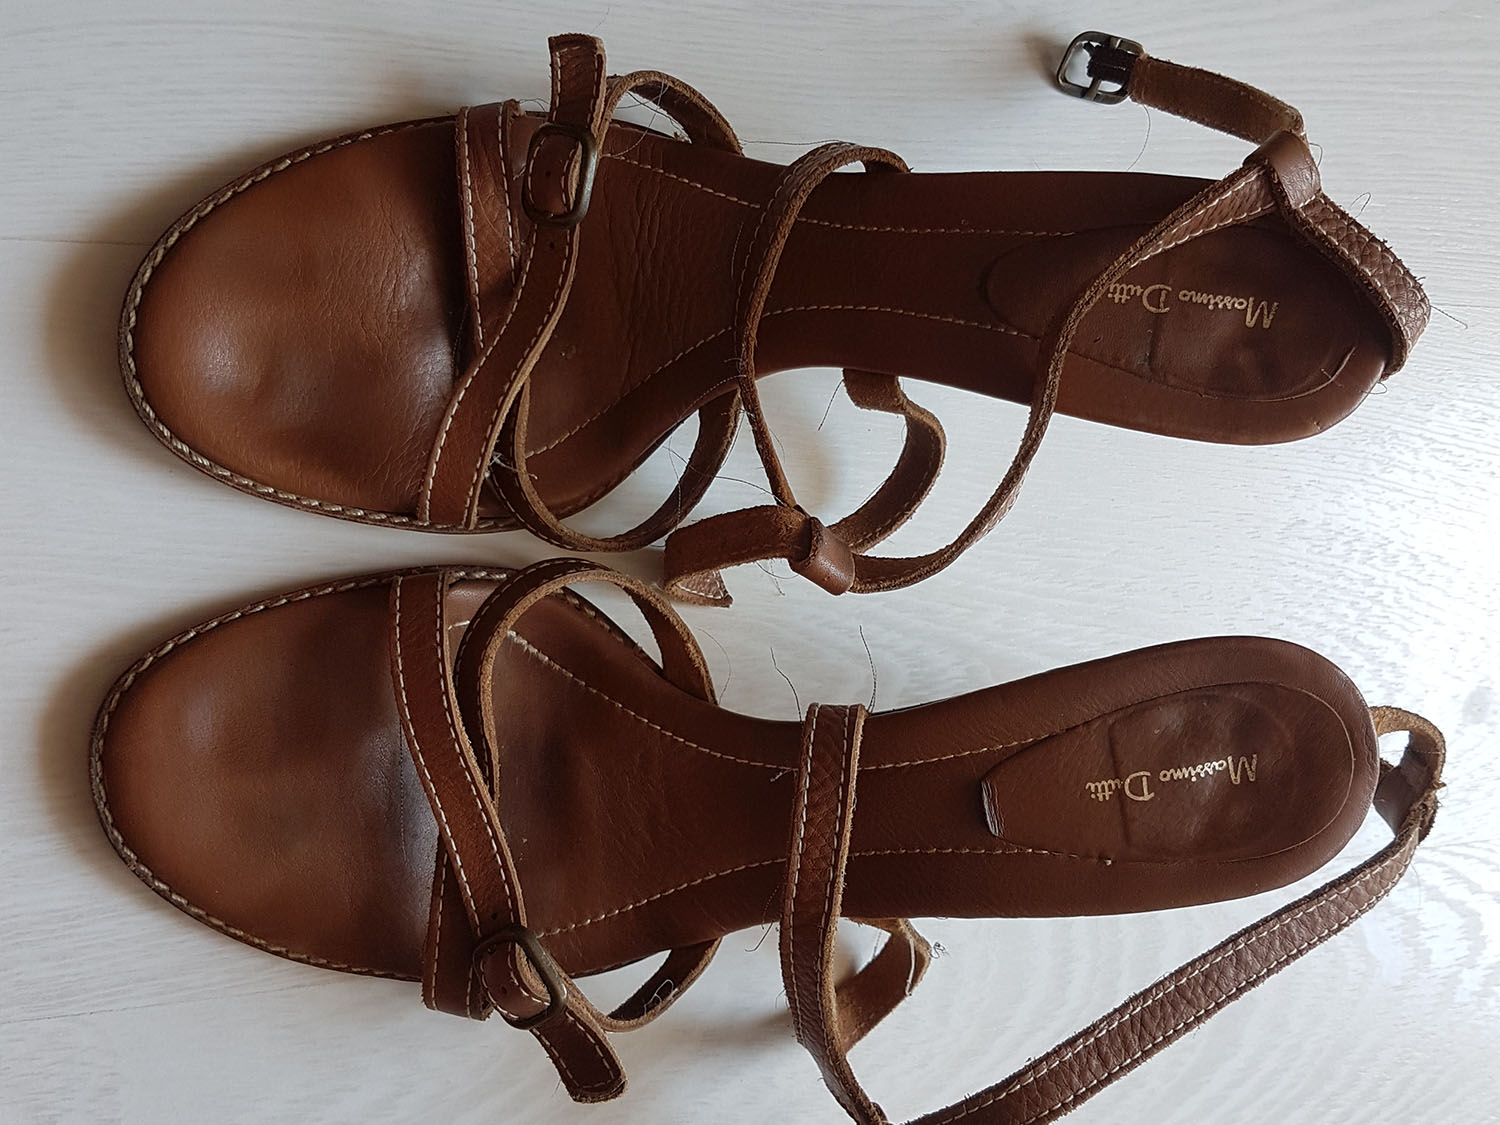 My worn shoes – Goddess Ezada Sinn